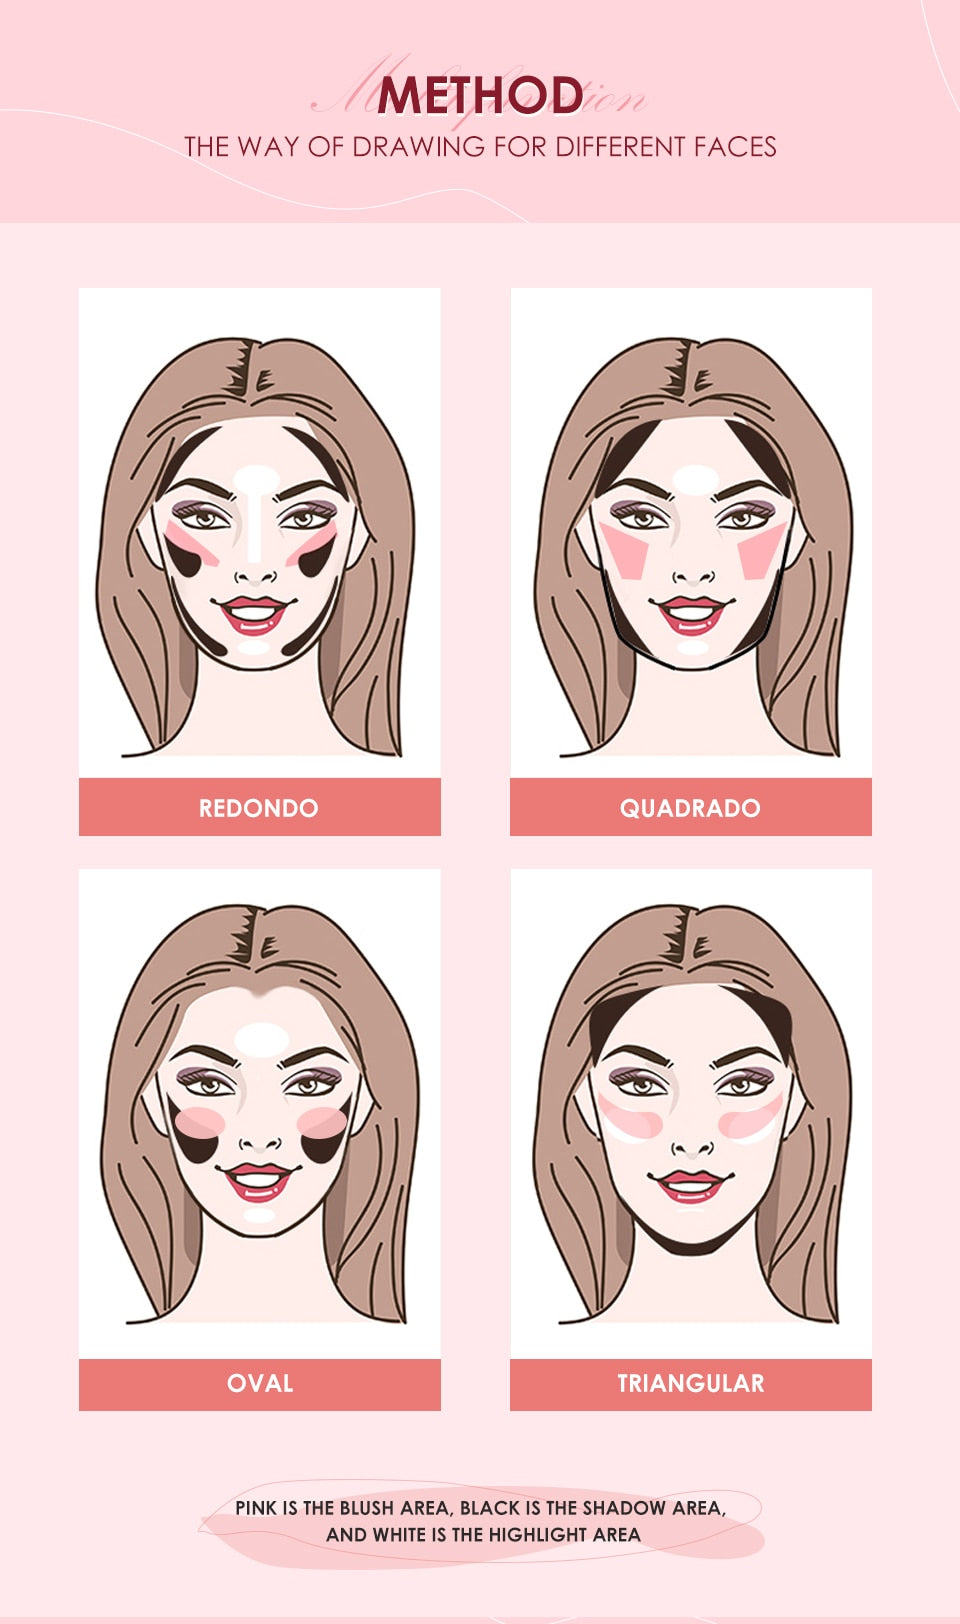 multi-use makeup palette